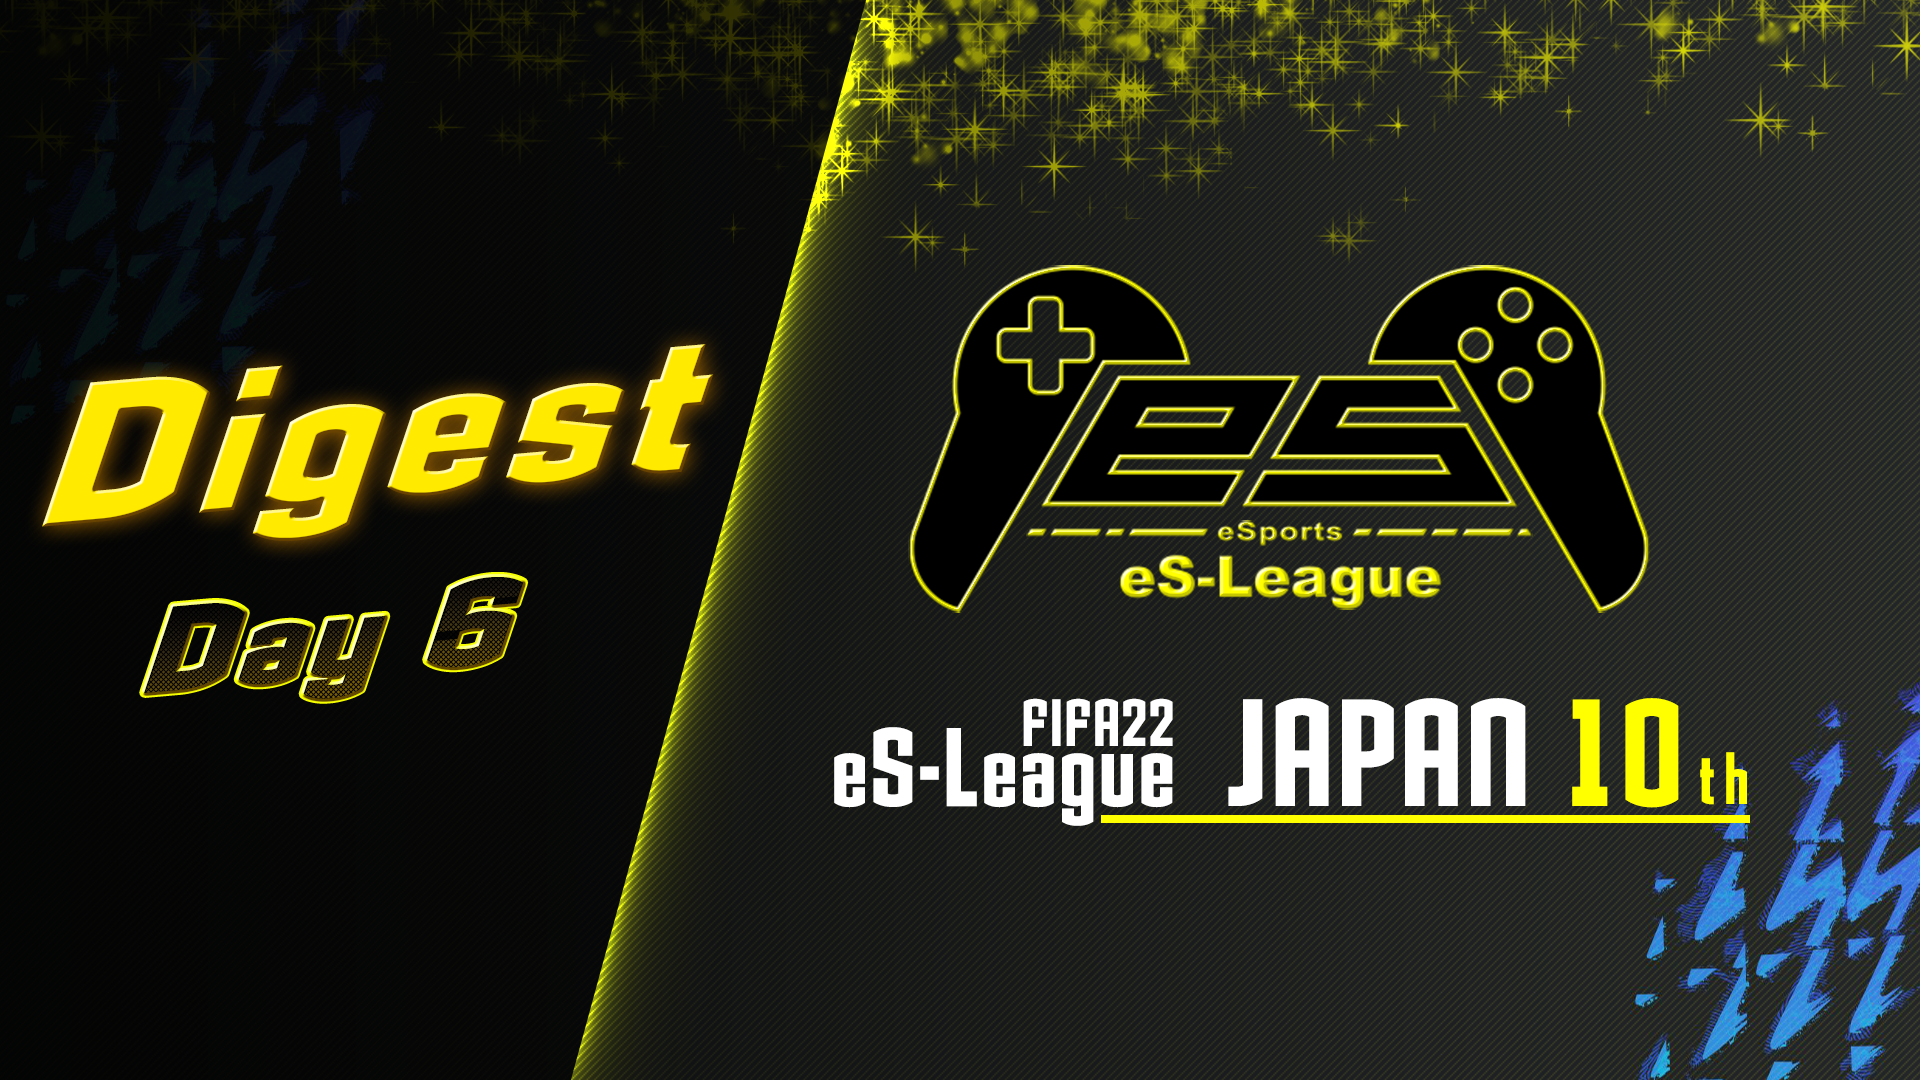 FIFA22 eS-League JAPAN 10th DAY6 ダイジェスト